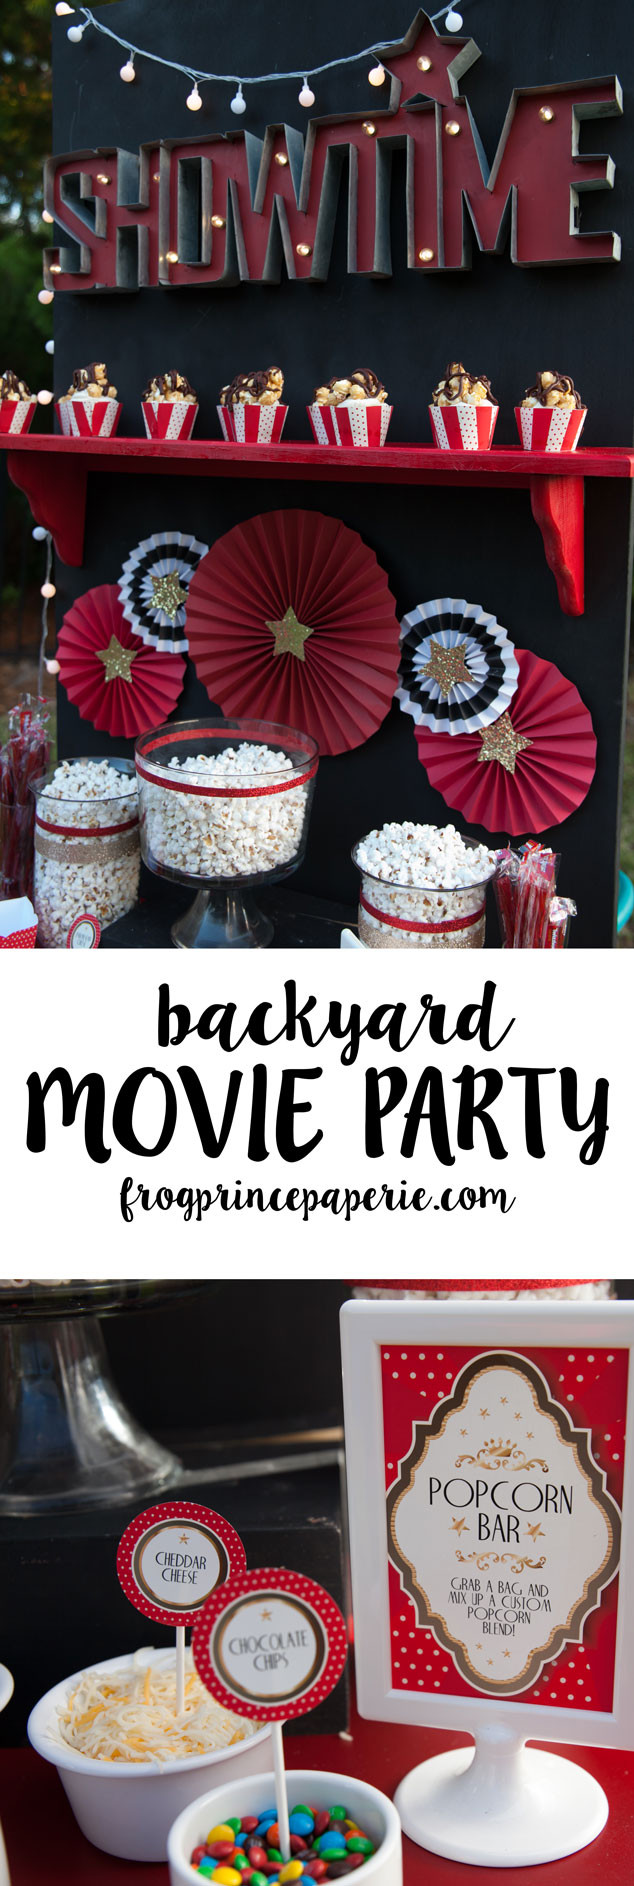 Backyard Theme Party Ideas
 Backyard Movie Party and Popcorn Bar Ideas